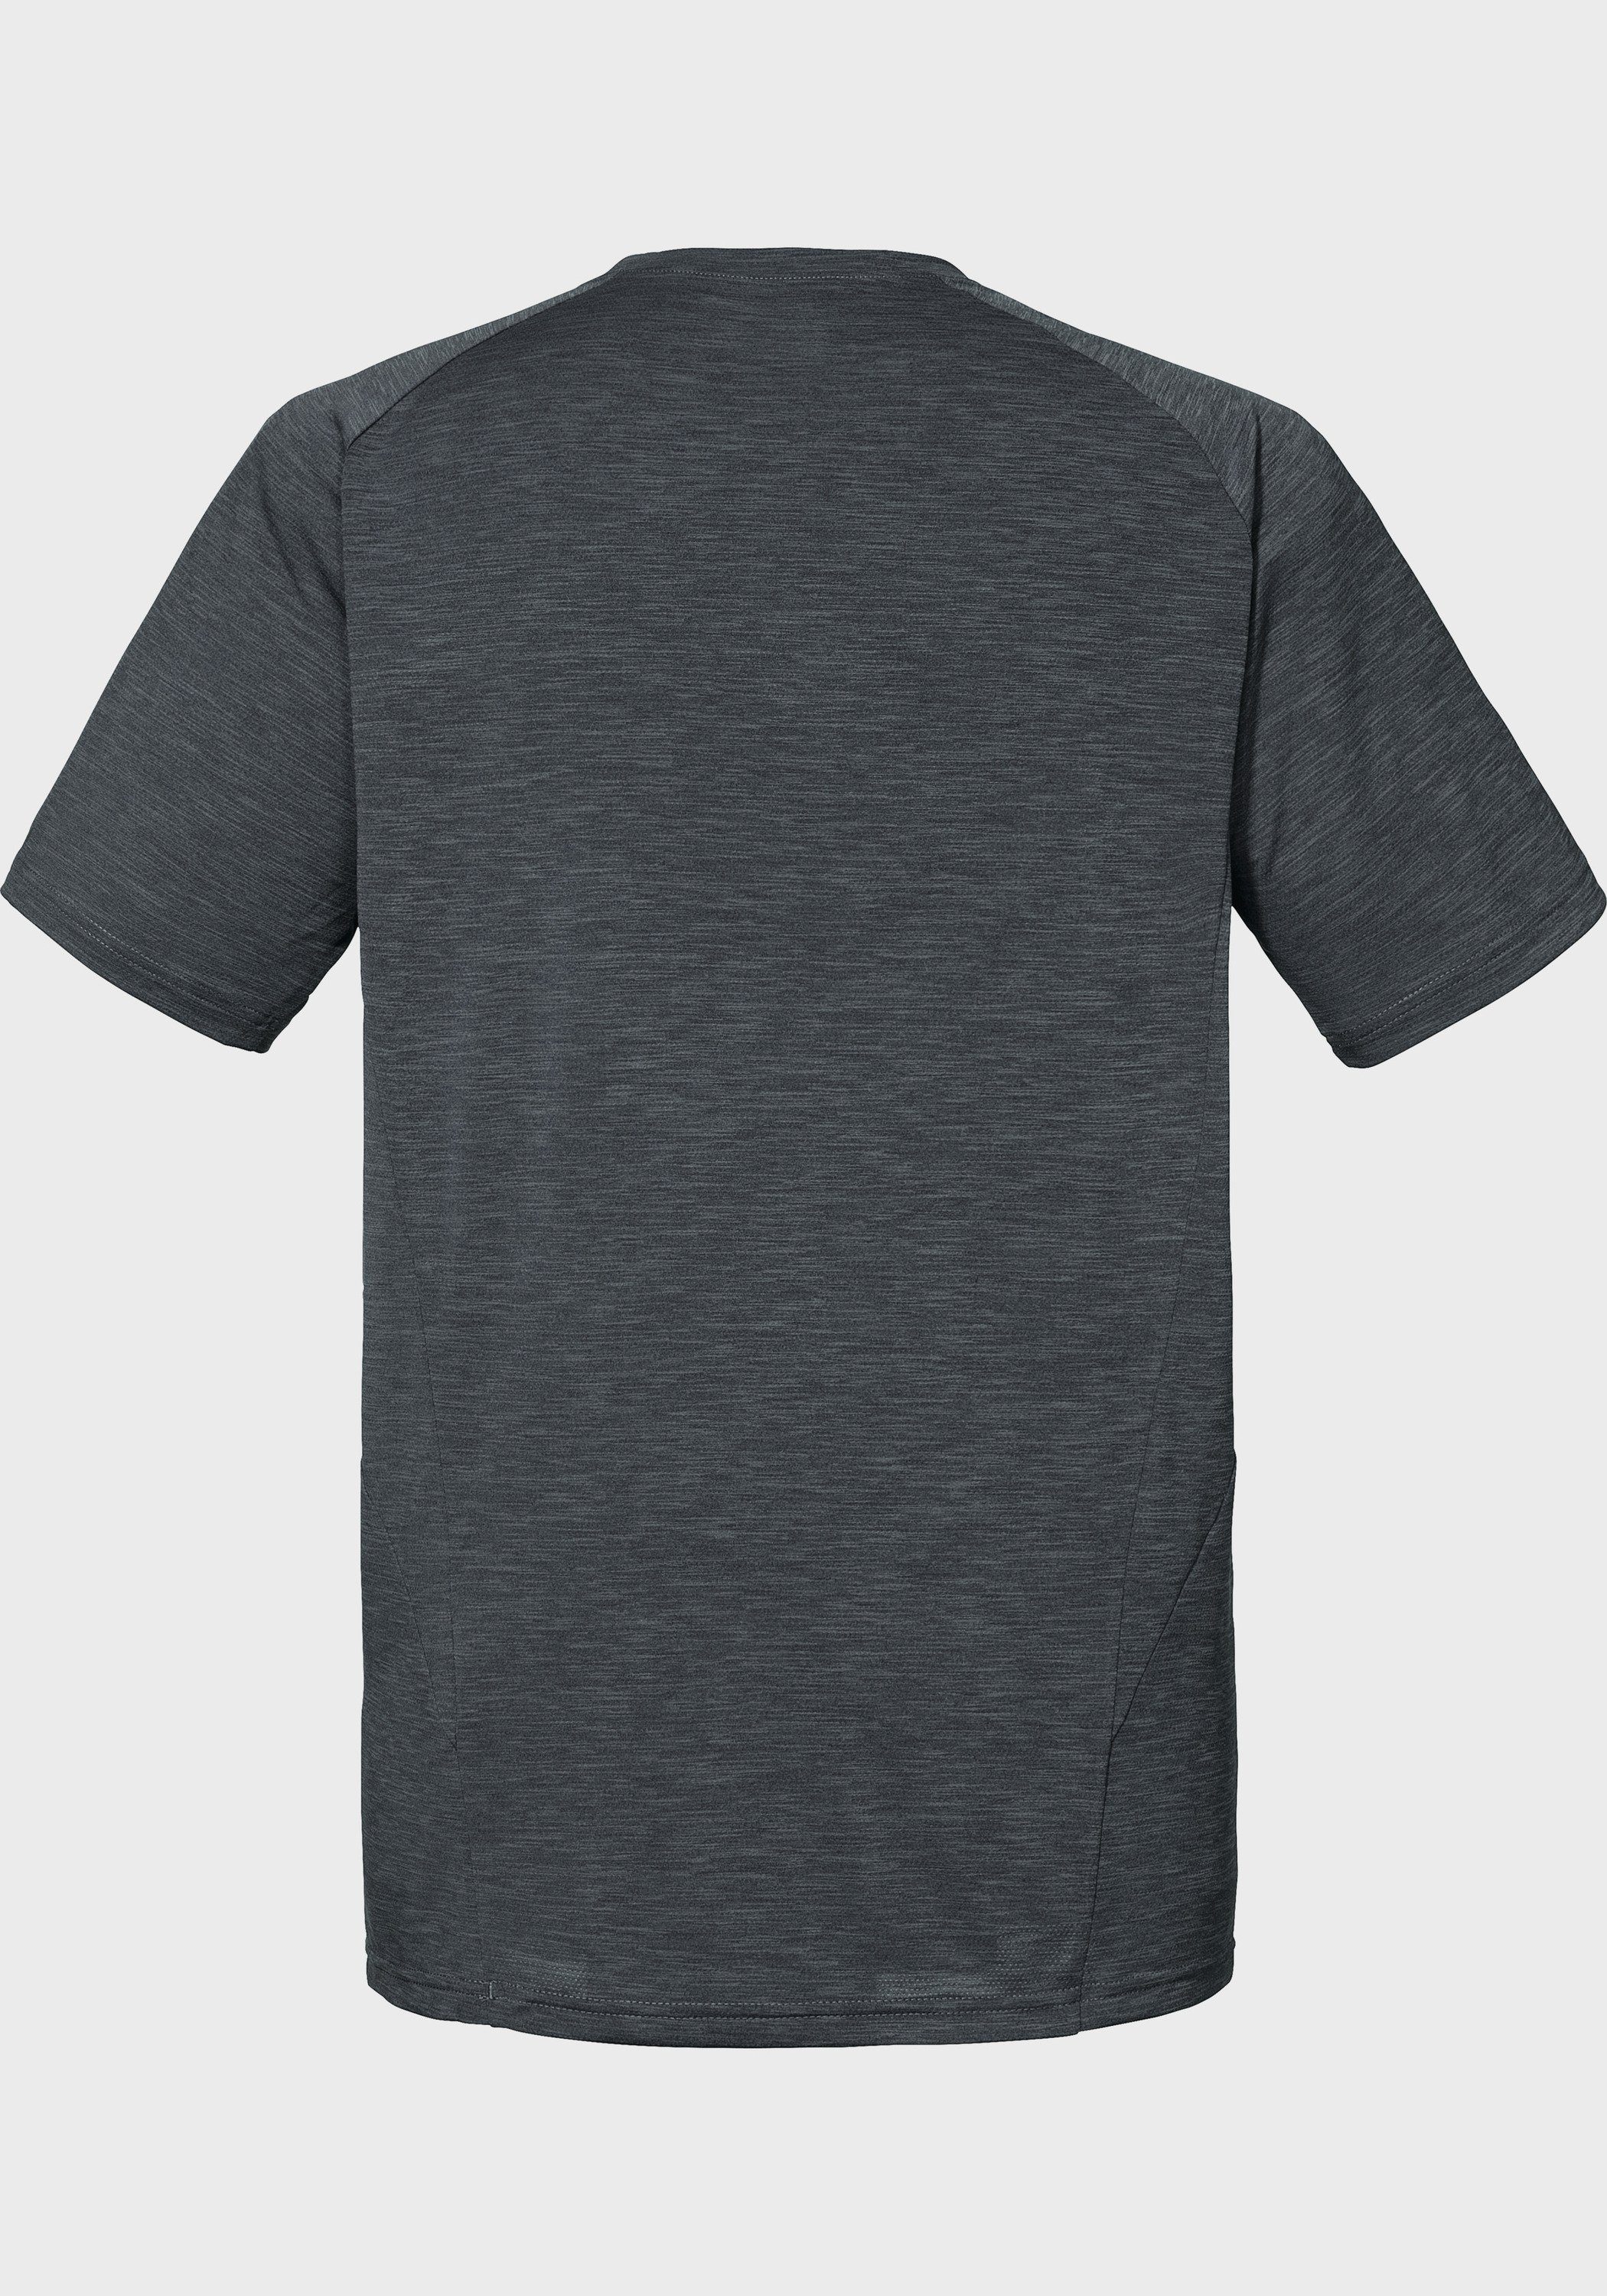 Schöffel T Shirt grau M Funktionsshirt Boise2